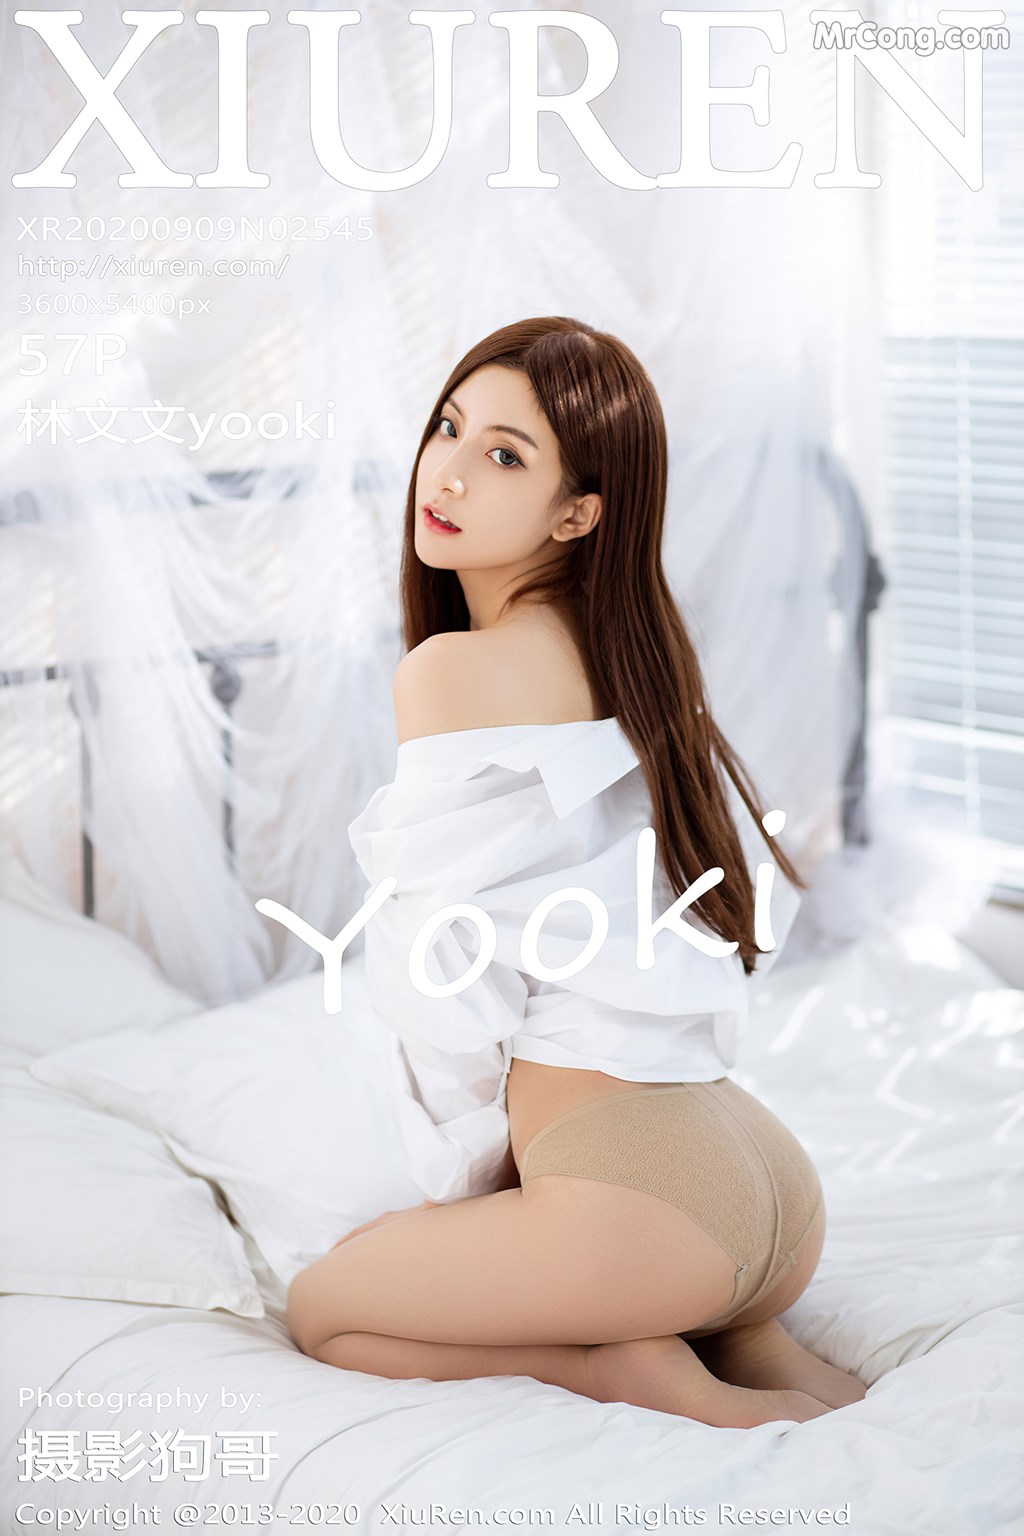 [XIUREN] No.2545 林文文yooki Cover Photo